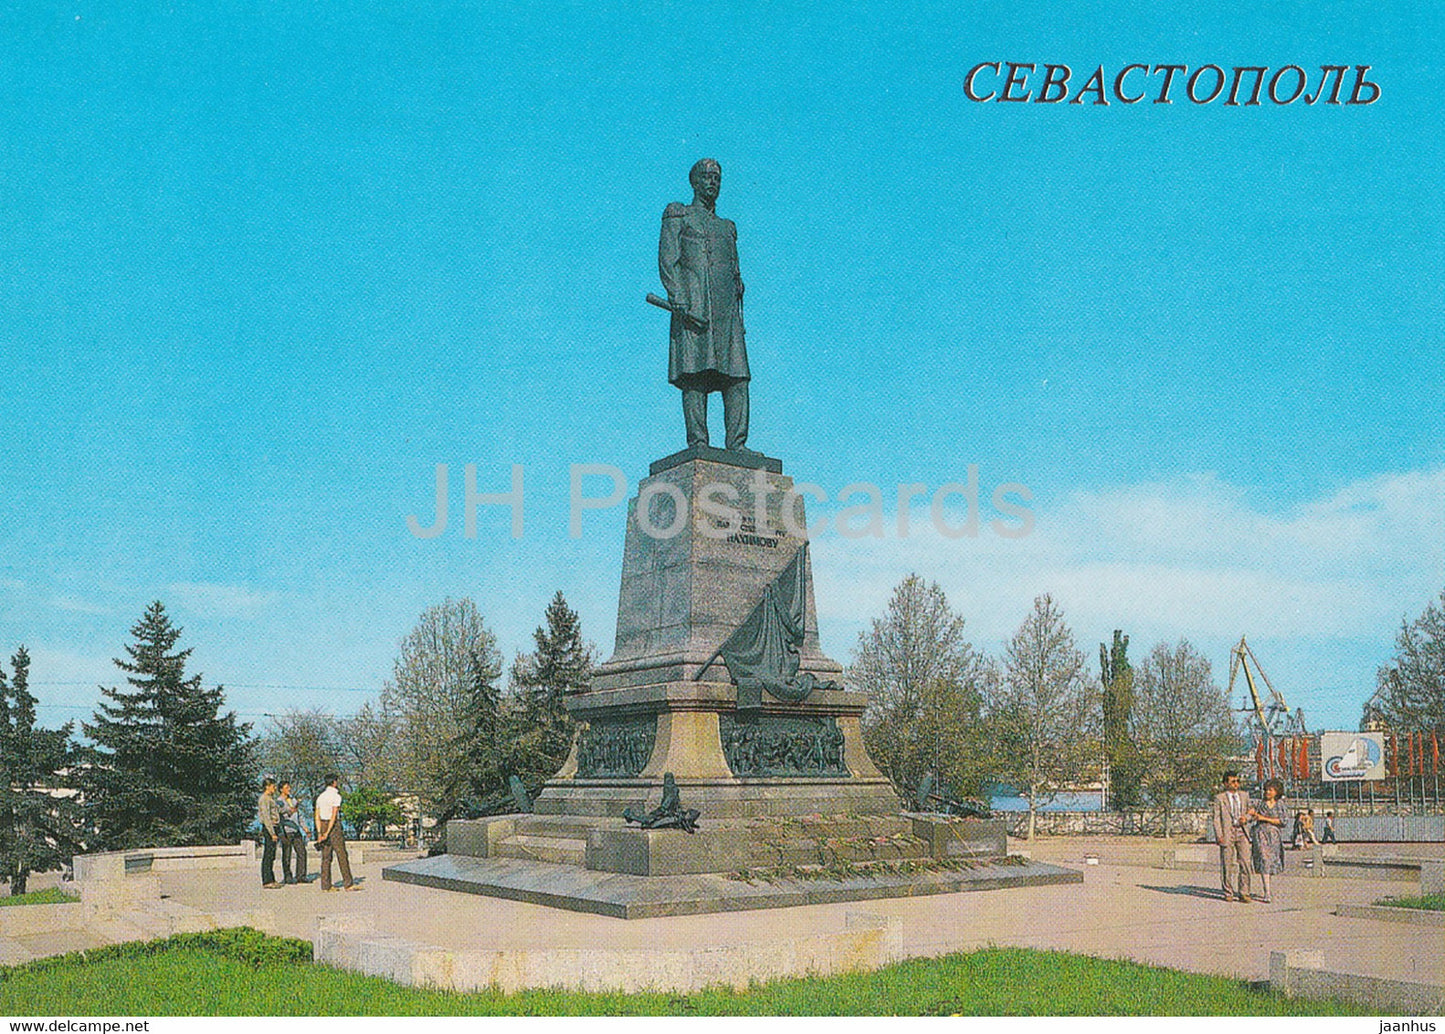 Sevastopol - monument to Admiral Nakhimov - 1989 - Ukraine USSR - unused - JH Postcards